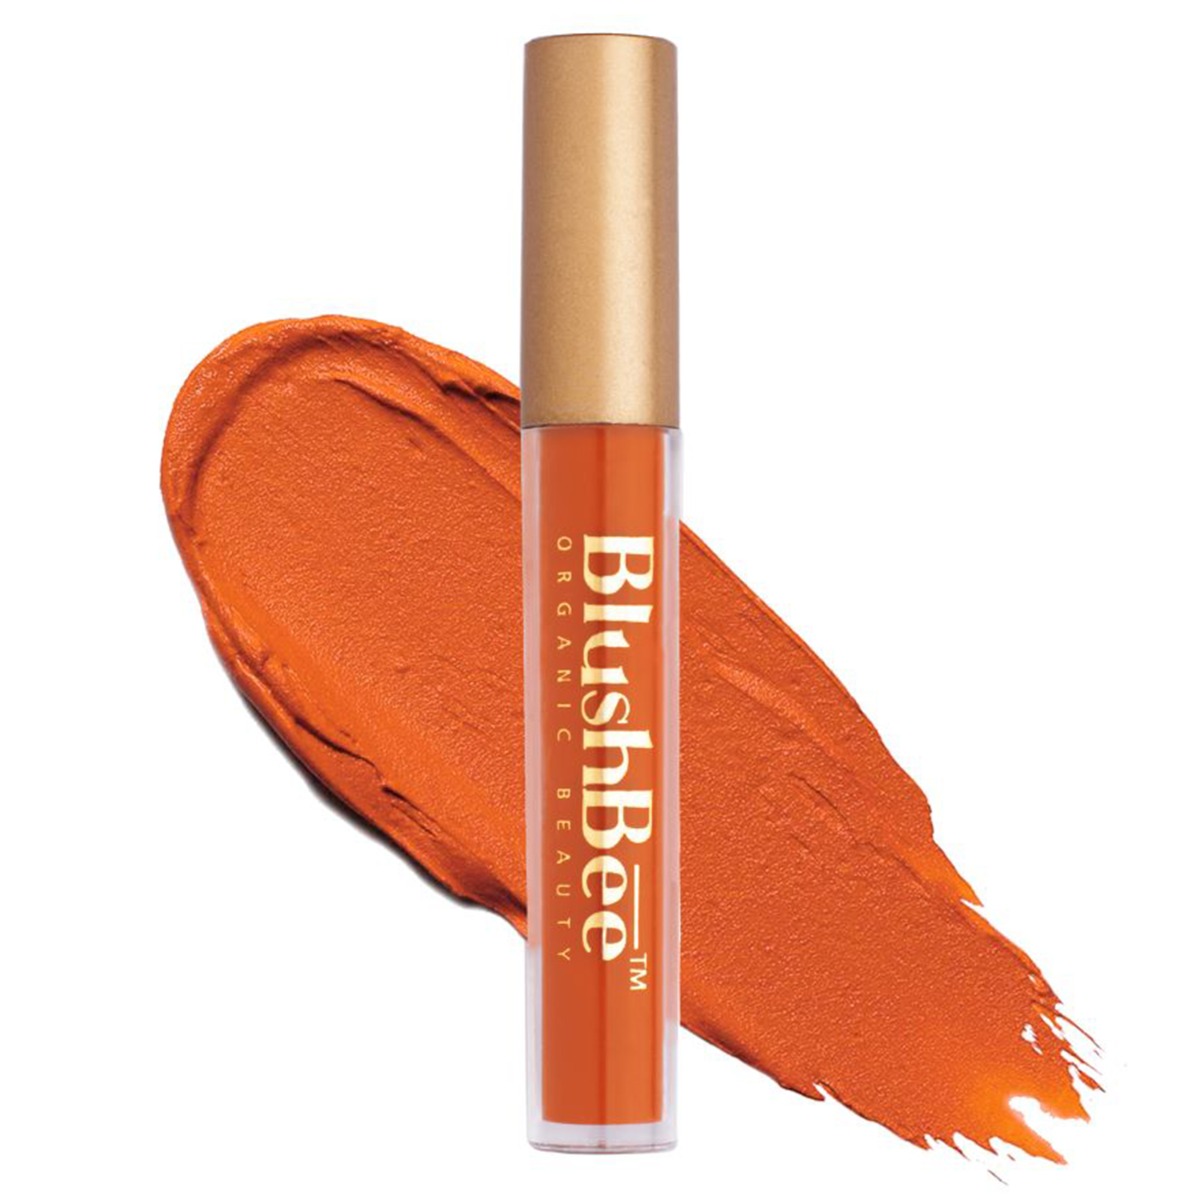 BlushBee Organic Beauty Lip Nourishing Vegan Long Lasting Liquid Lipstick - Crush Way, Almond Brown, 5ml